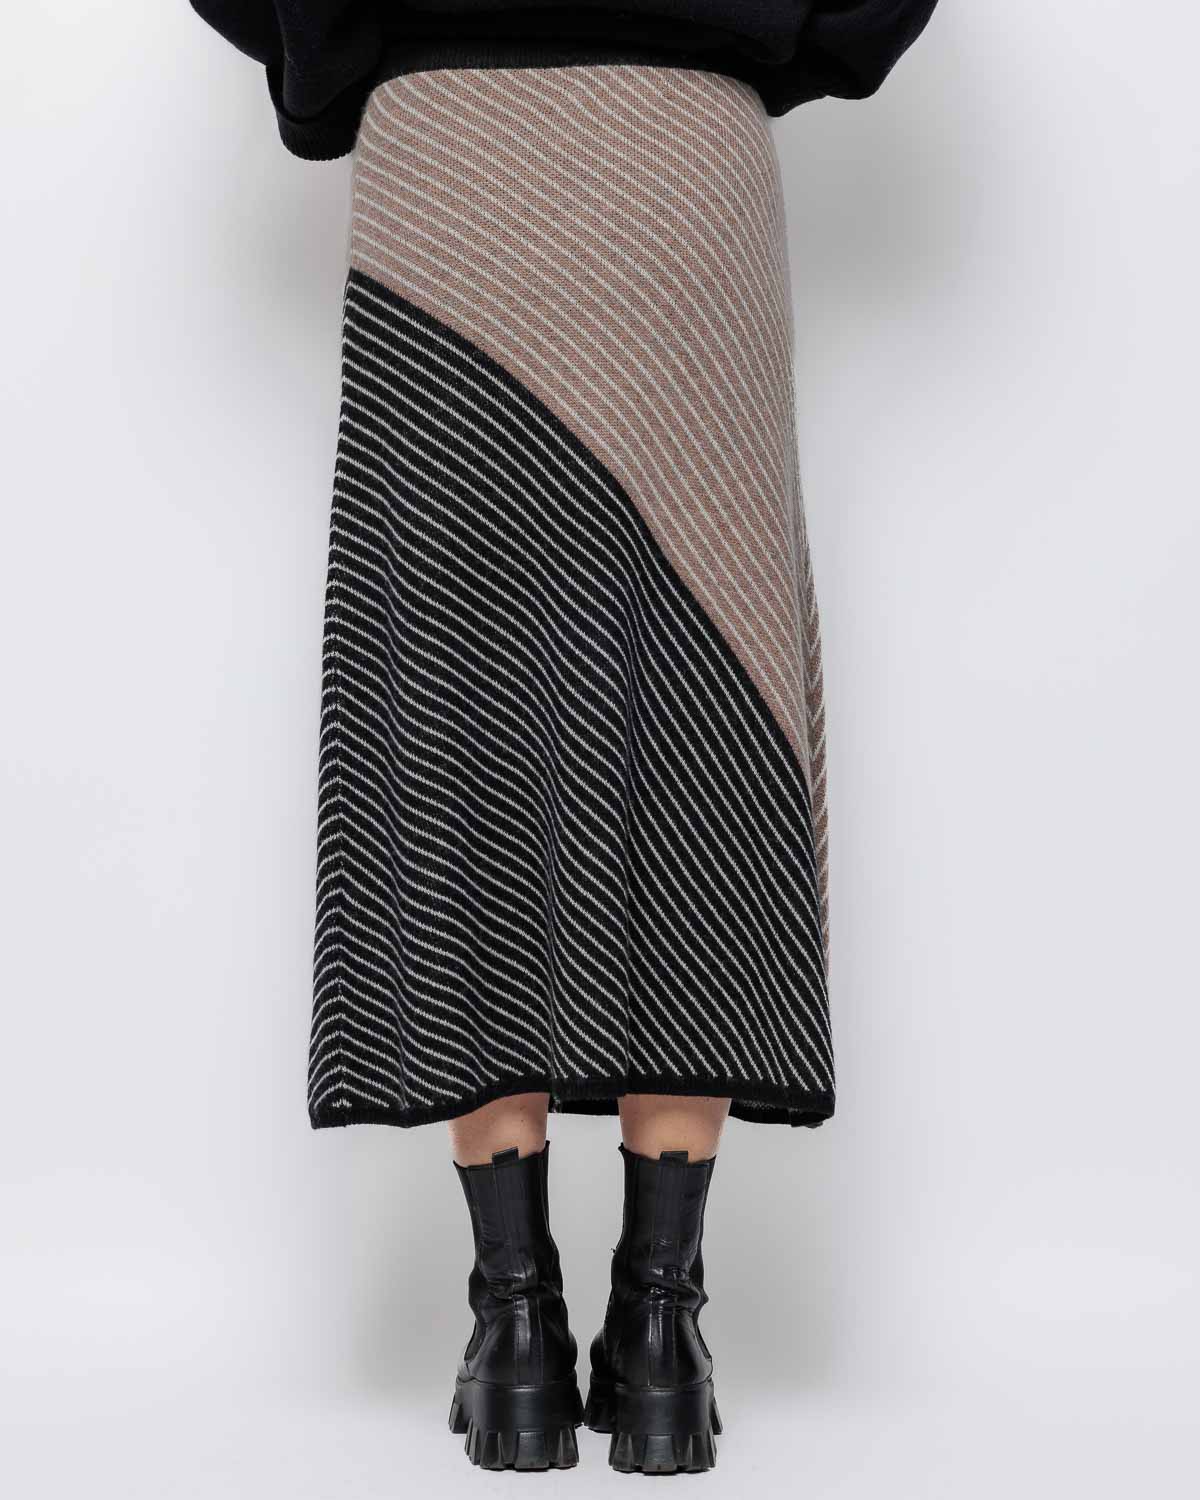 InWear Rancell Print Skirt in Mocha Grey